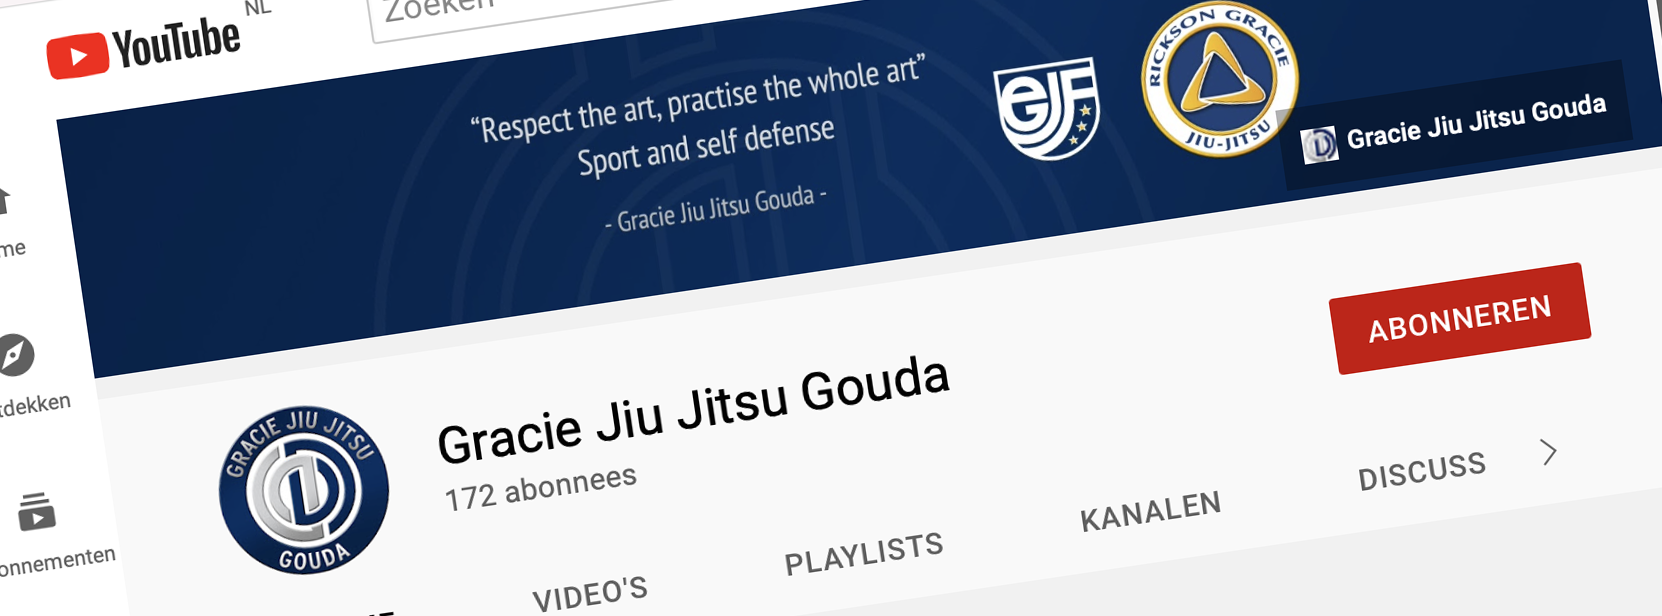 gracie-jiu-jitsu-gouda_youtube-2